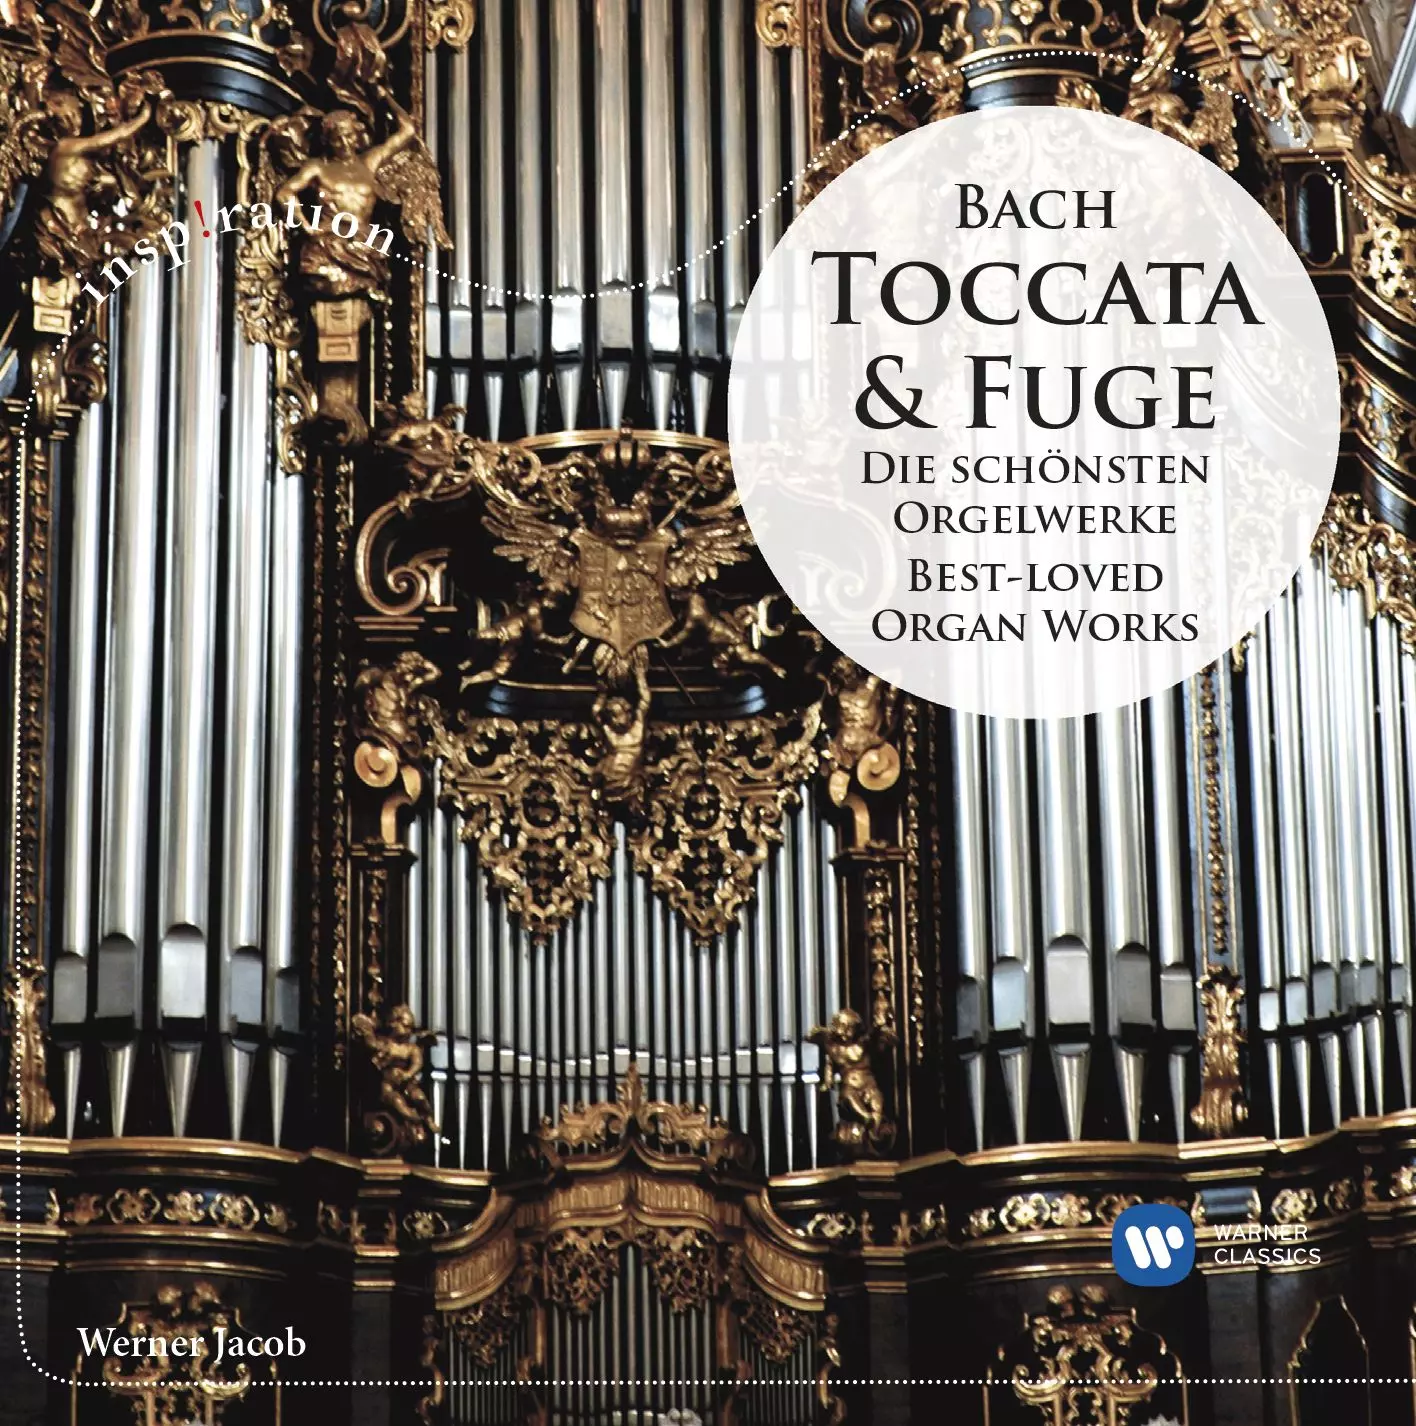 Bach: Toccata & Fuge - Best-loved Organ works